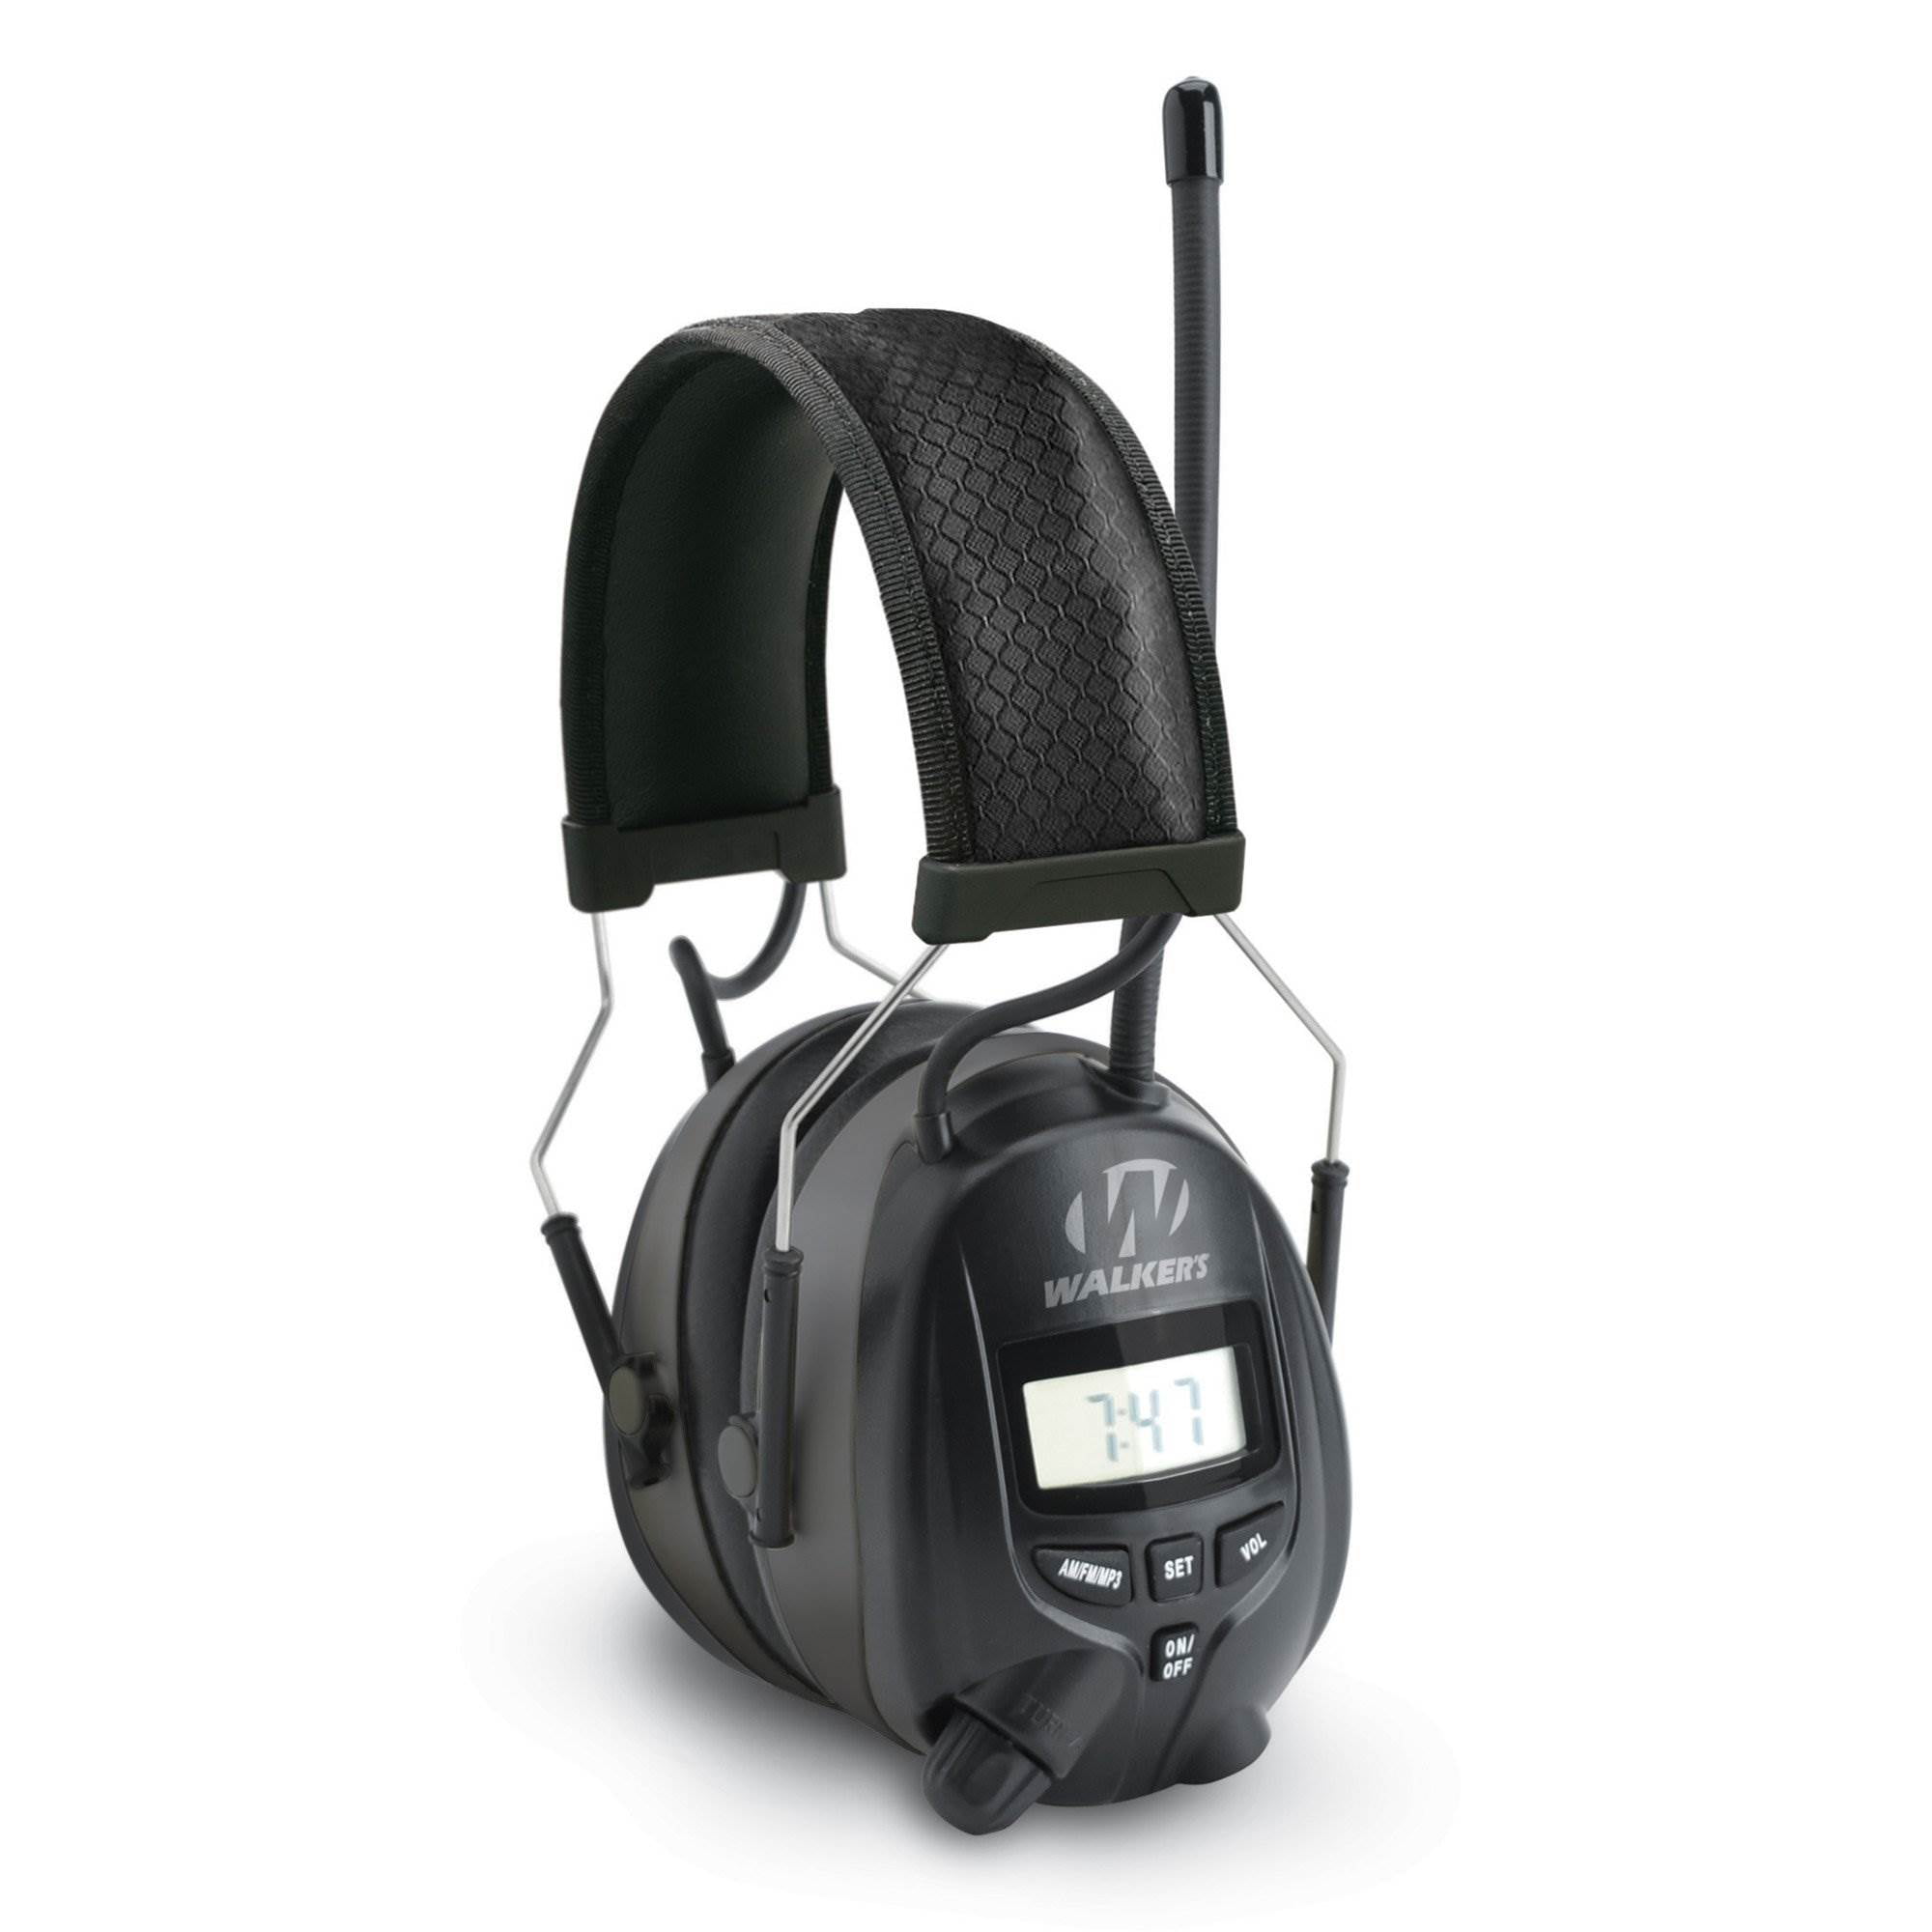 Walkers Ue2002 Pair Ultra Ear Hearing Amplifier ITC for sale online 